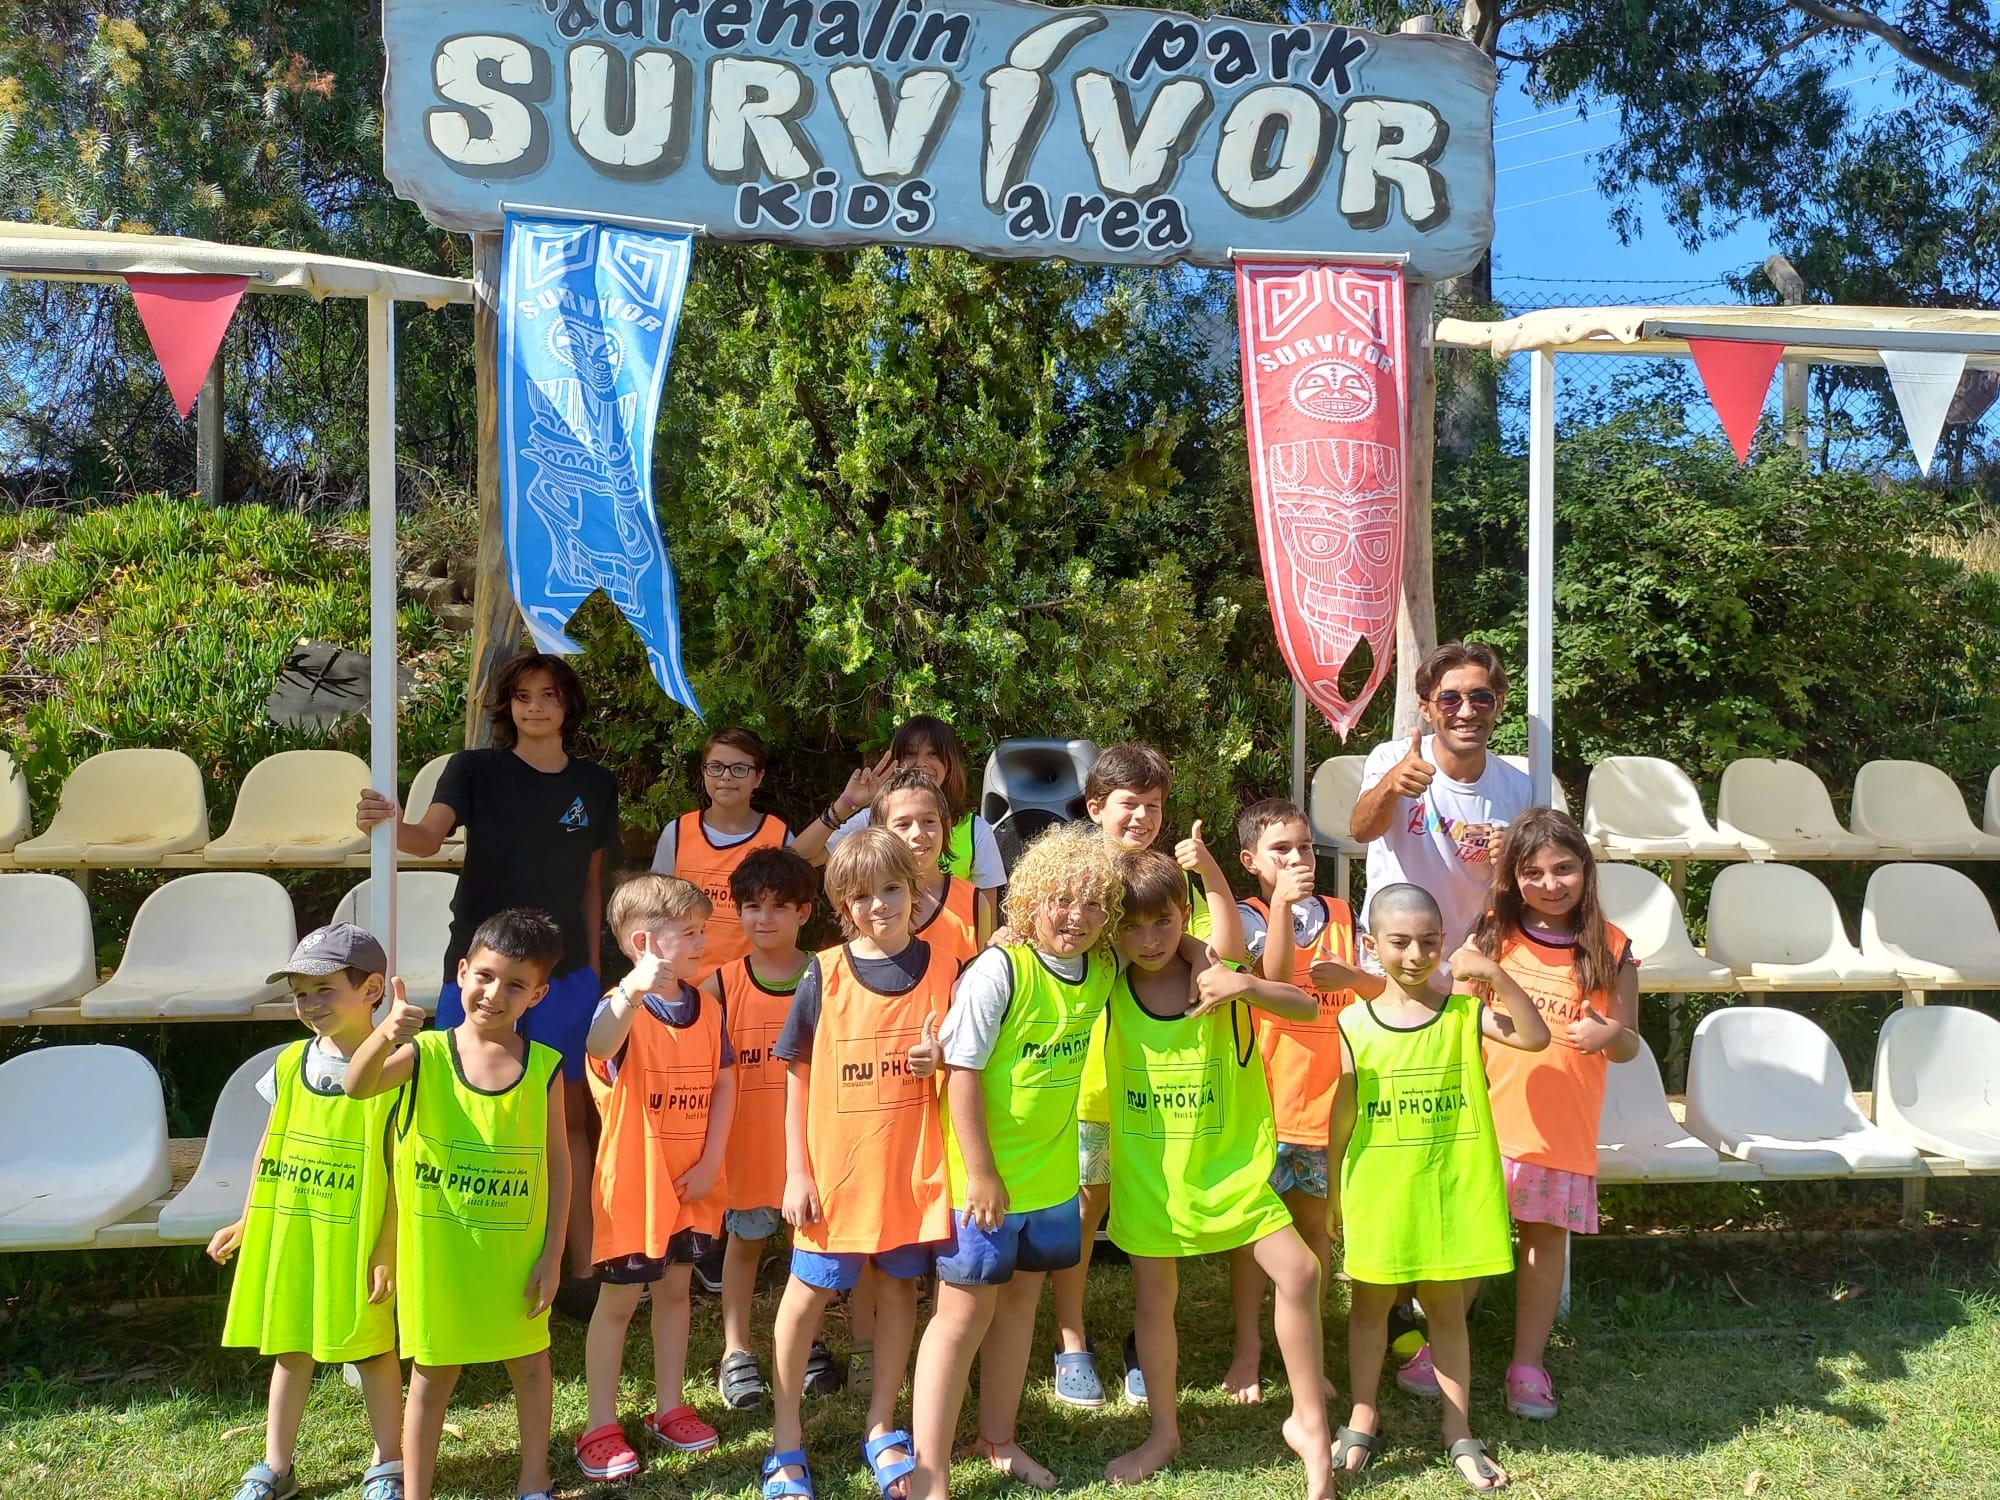 MW Phokaia Beach & Resort - Kids & Young Survivor